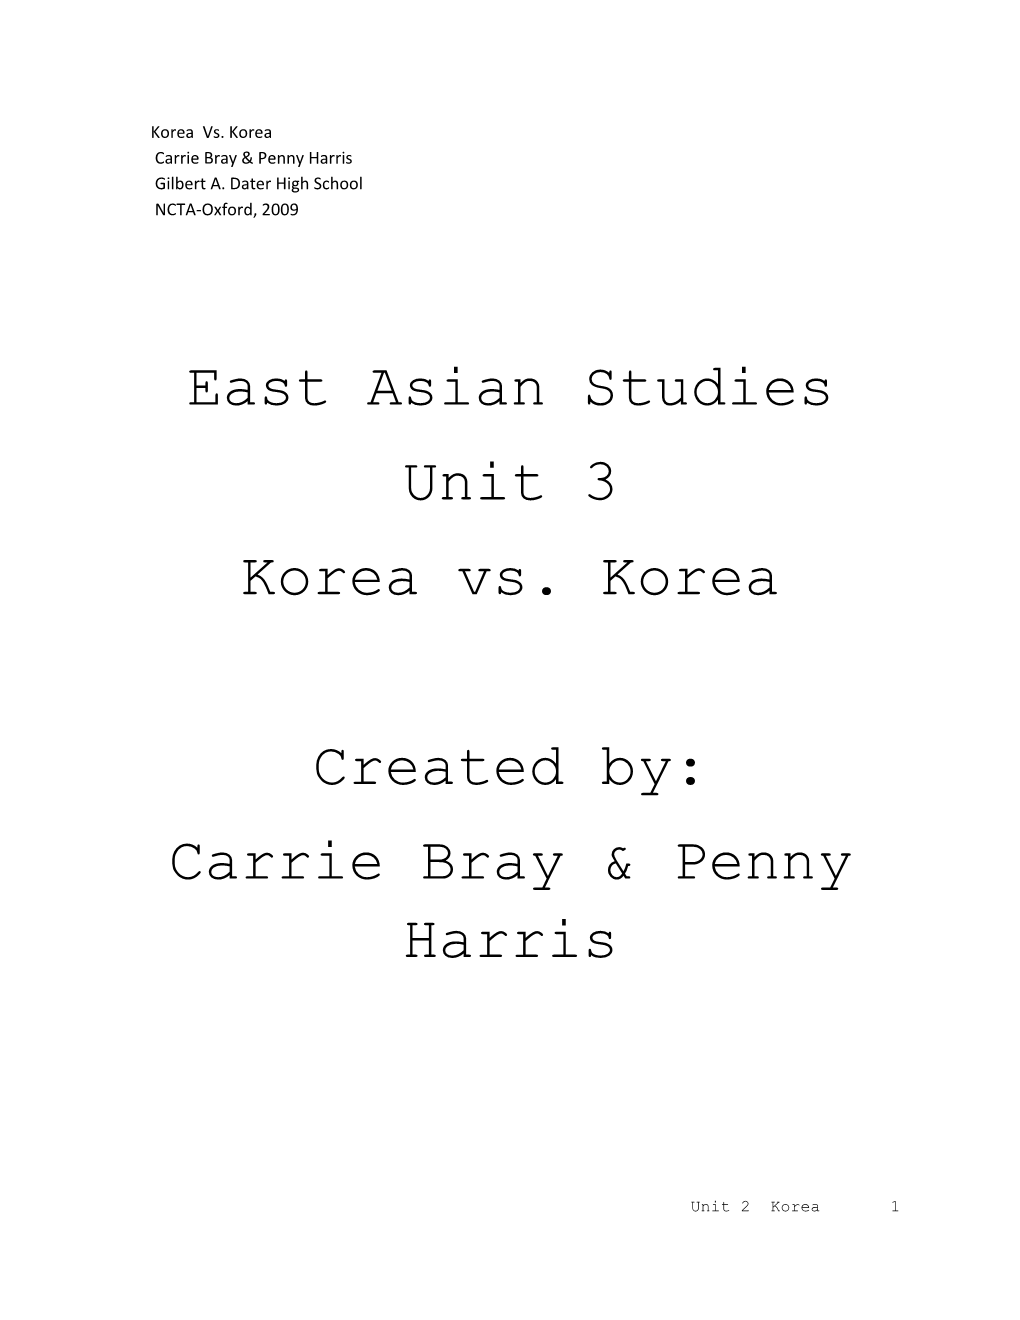 East Asian Studies Unit 3 Korea Vs. Korea Created By